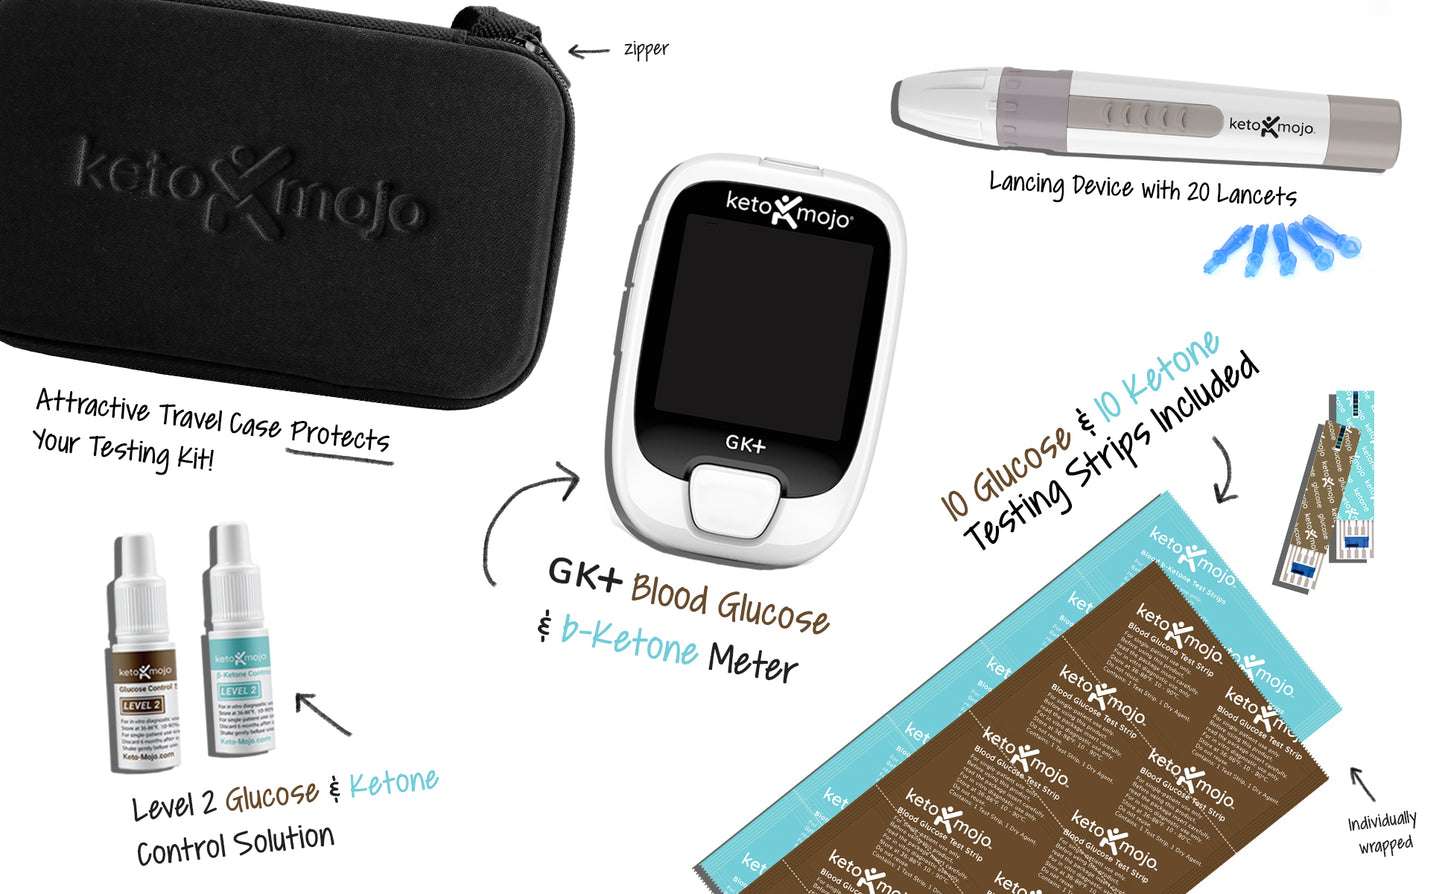 Keto-Mojo GK + جلوكوز الدم وكيتون الأساسية متر كيت - قائمة الشركة الرسمية